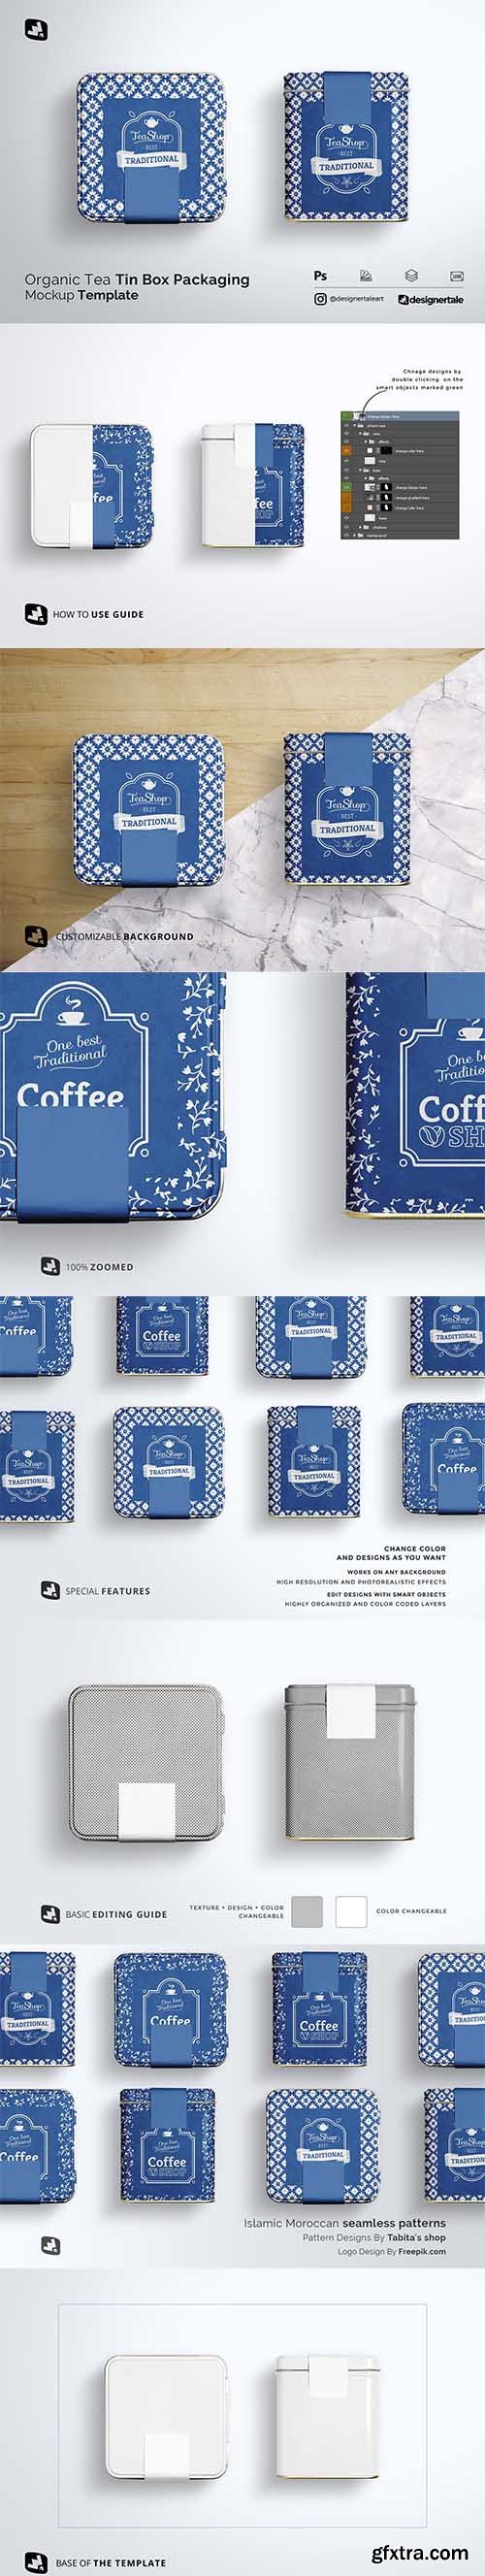 CreativeMarket - Organic Tea Tin Box Packaging Mockup 5340759